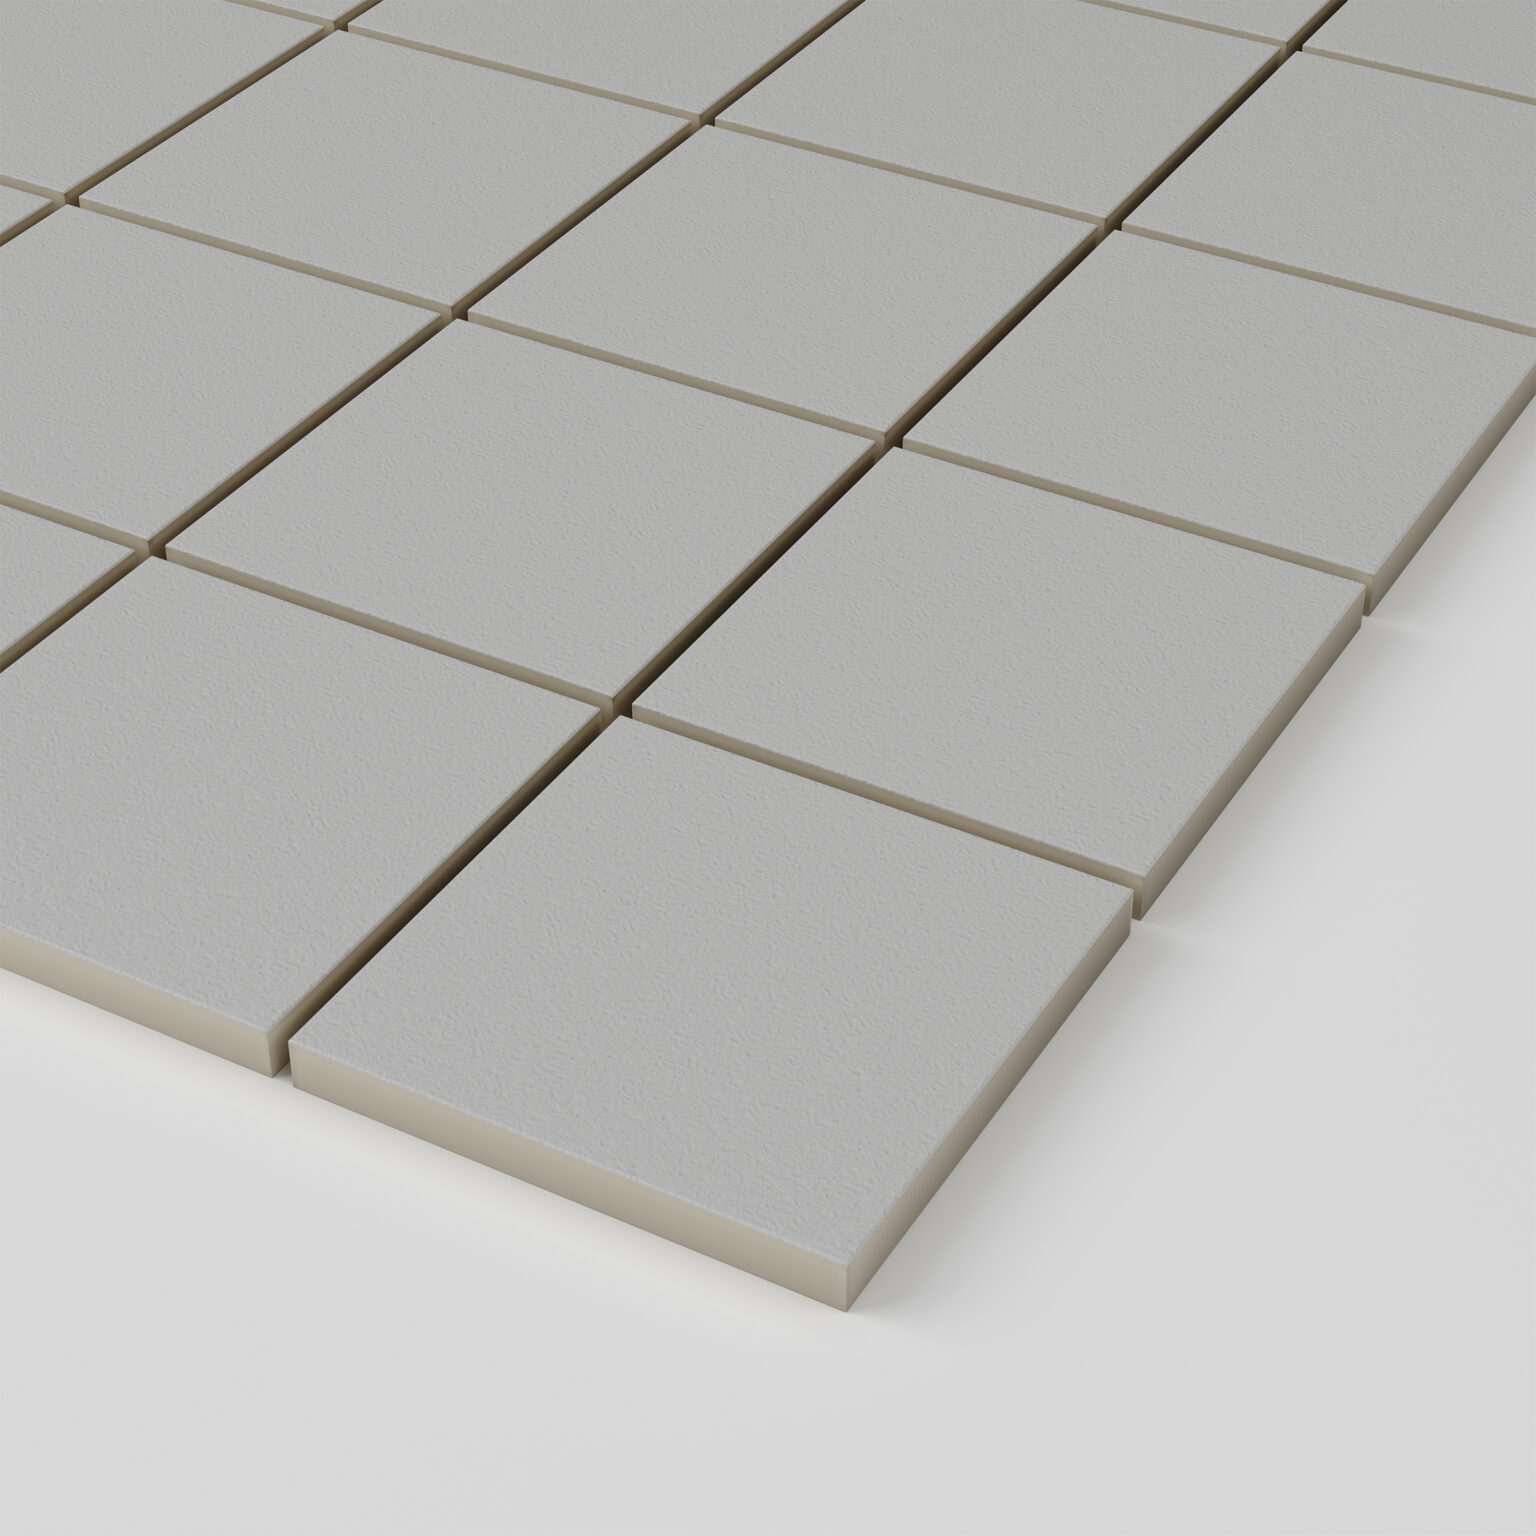 2" Square Mosaics - Textured- Light Gray Porcelain- 12" x 12" Sheet - corner view